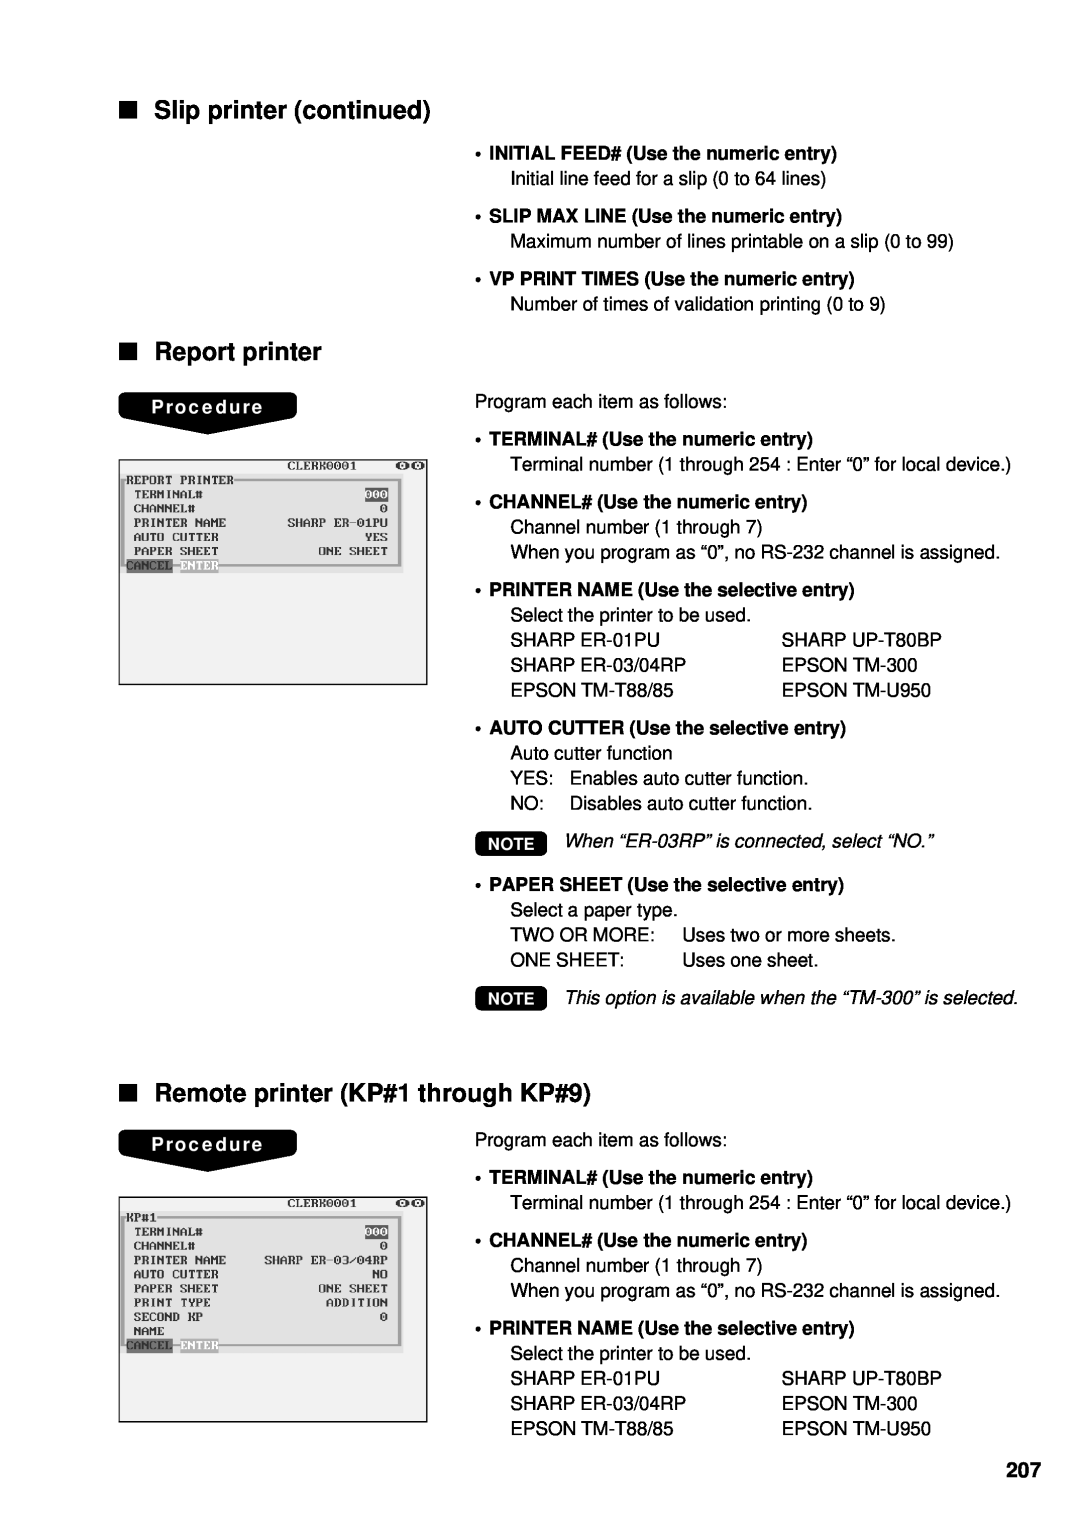 Sharp UP-3300 instruction manual Slip printer continued Report printer, Remote printer KP#1 through KP#9, Procedure 